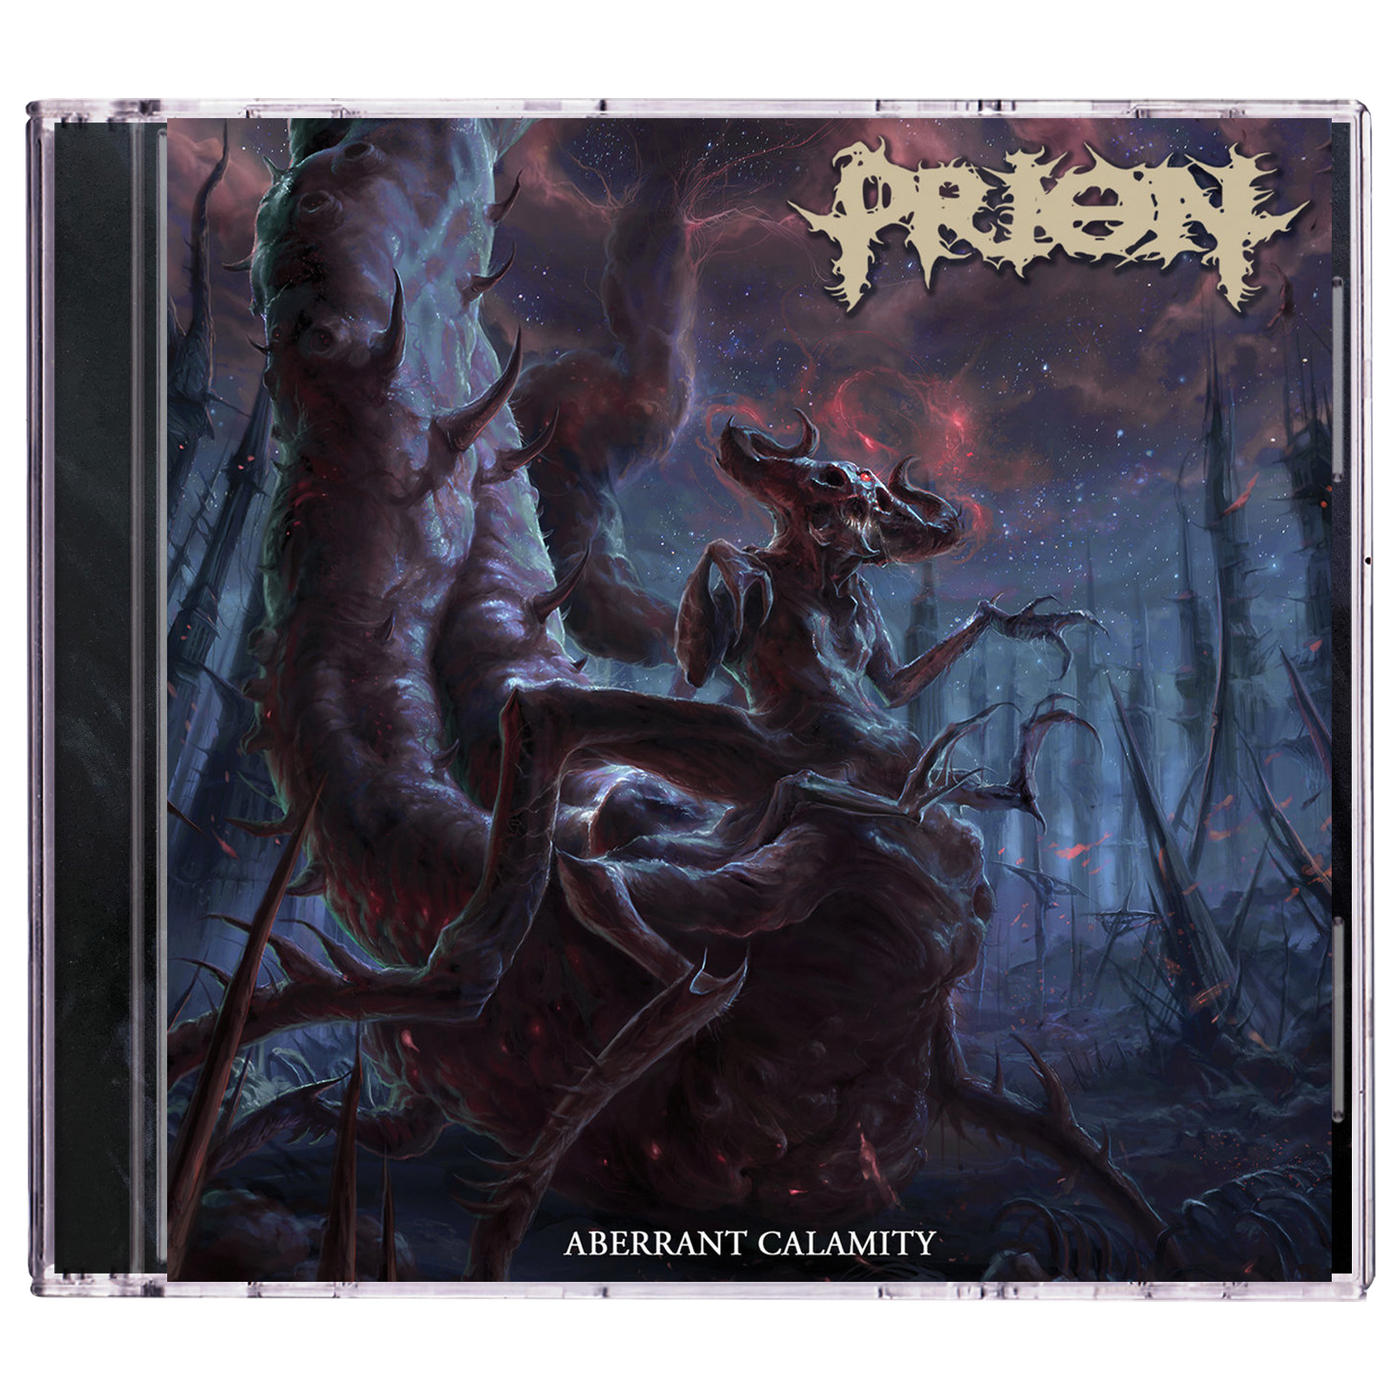 Prion 'Aberrant Calamity' CD